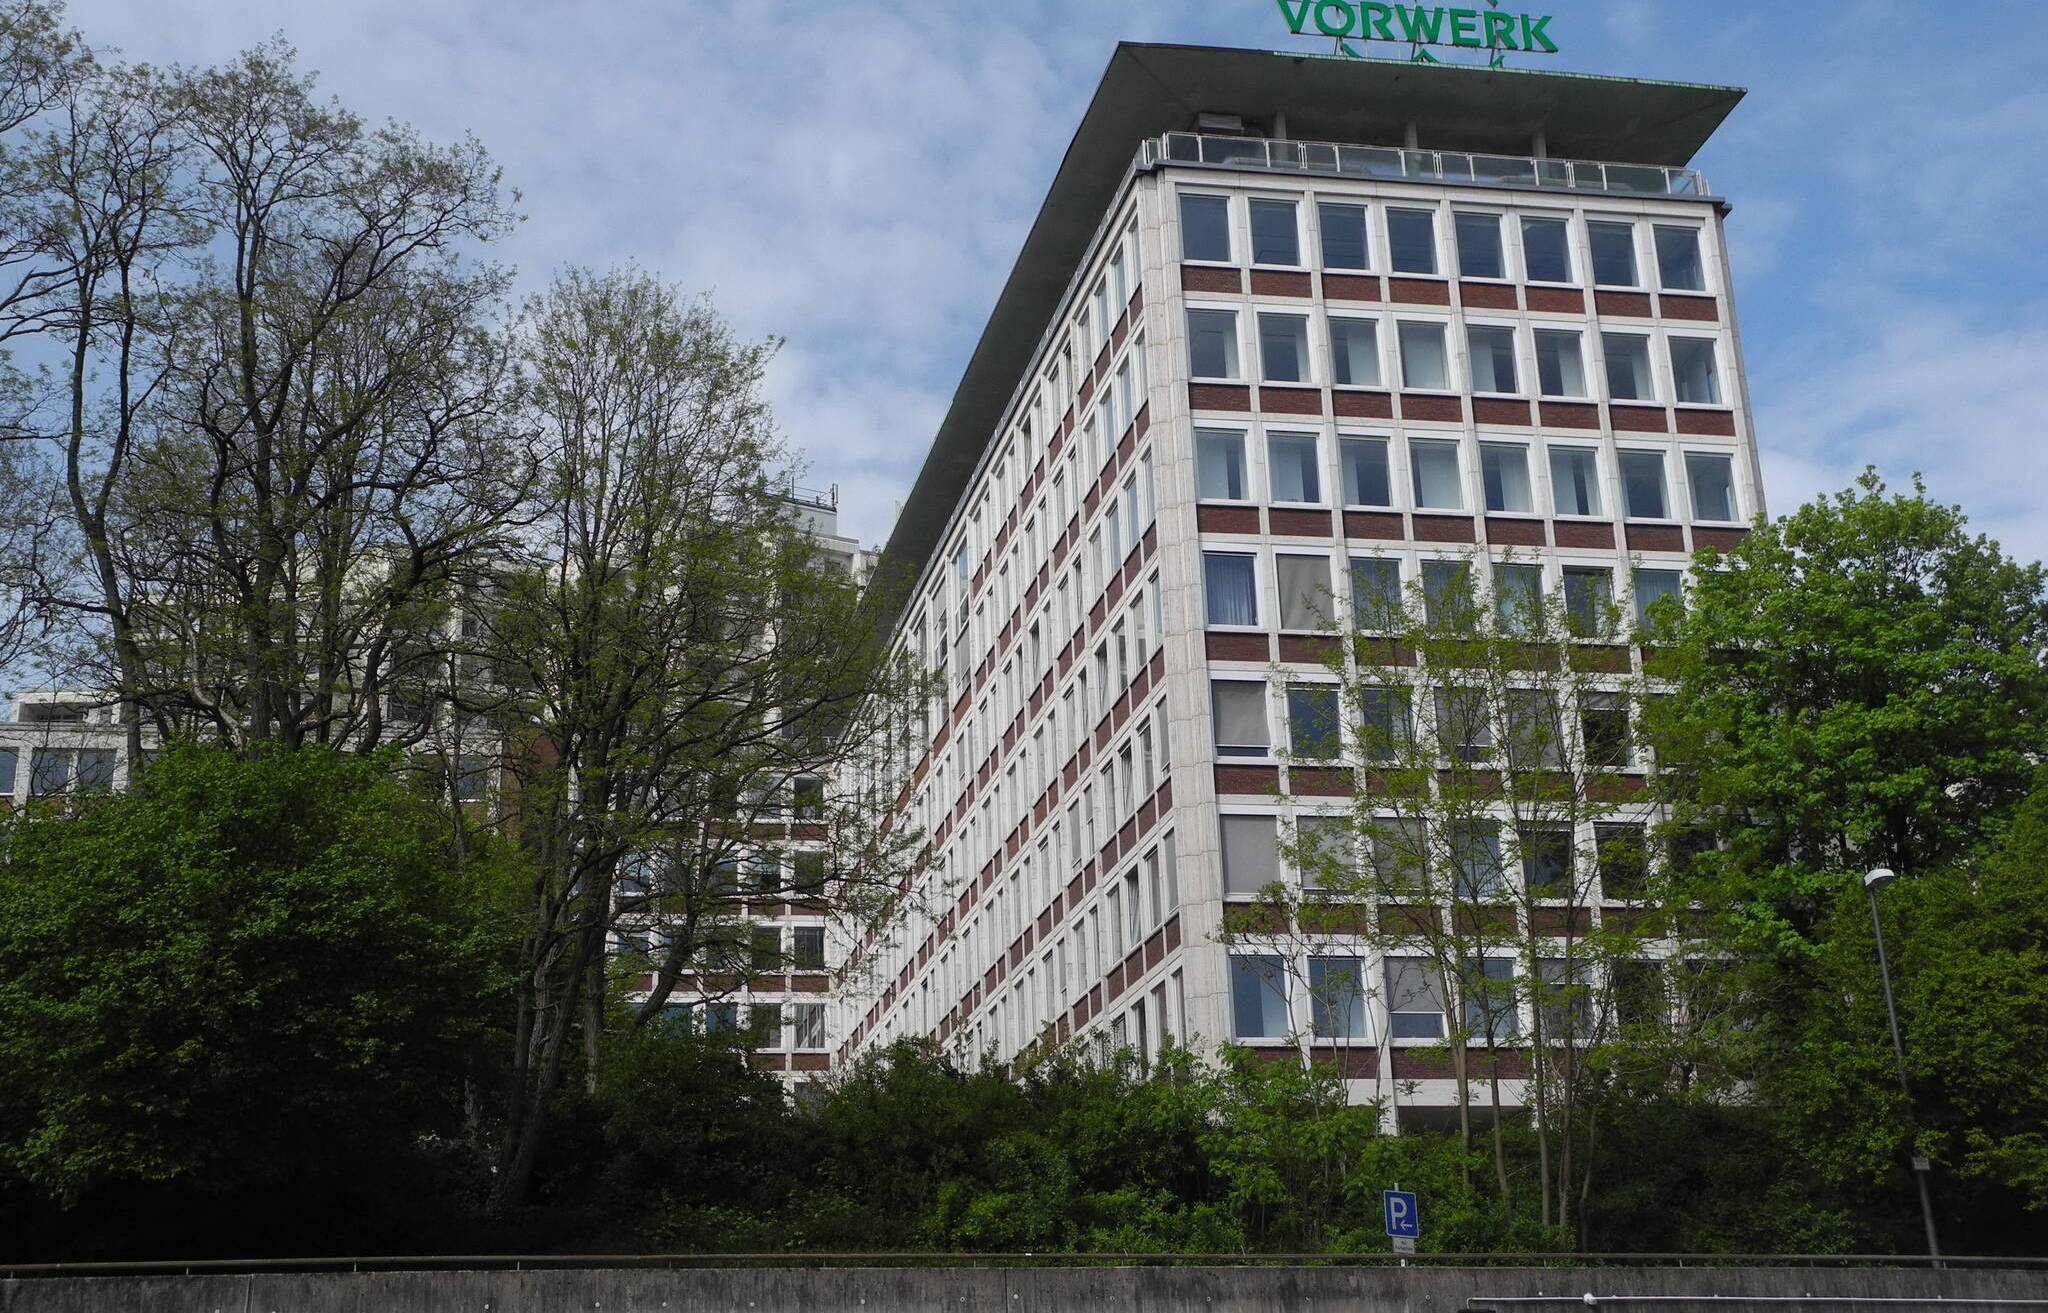 Die Wuppertaler Vorwerk-Zentrale.